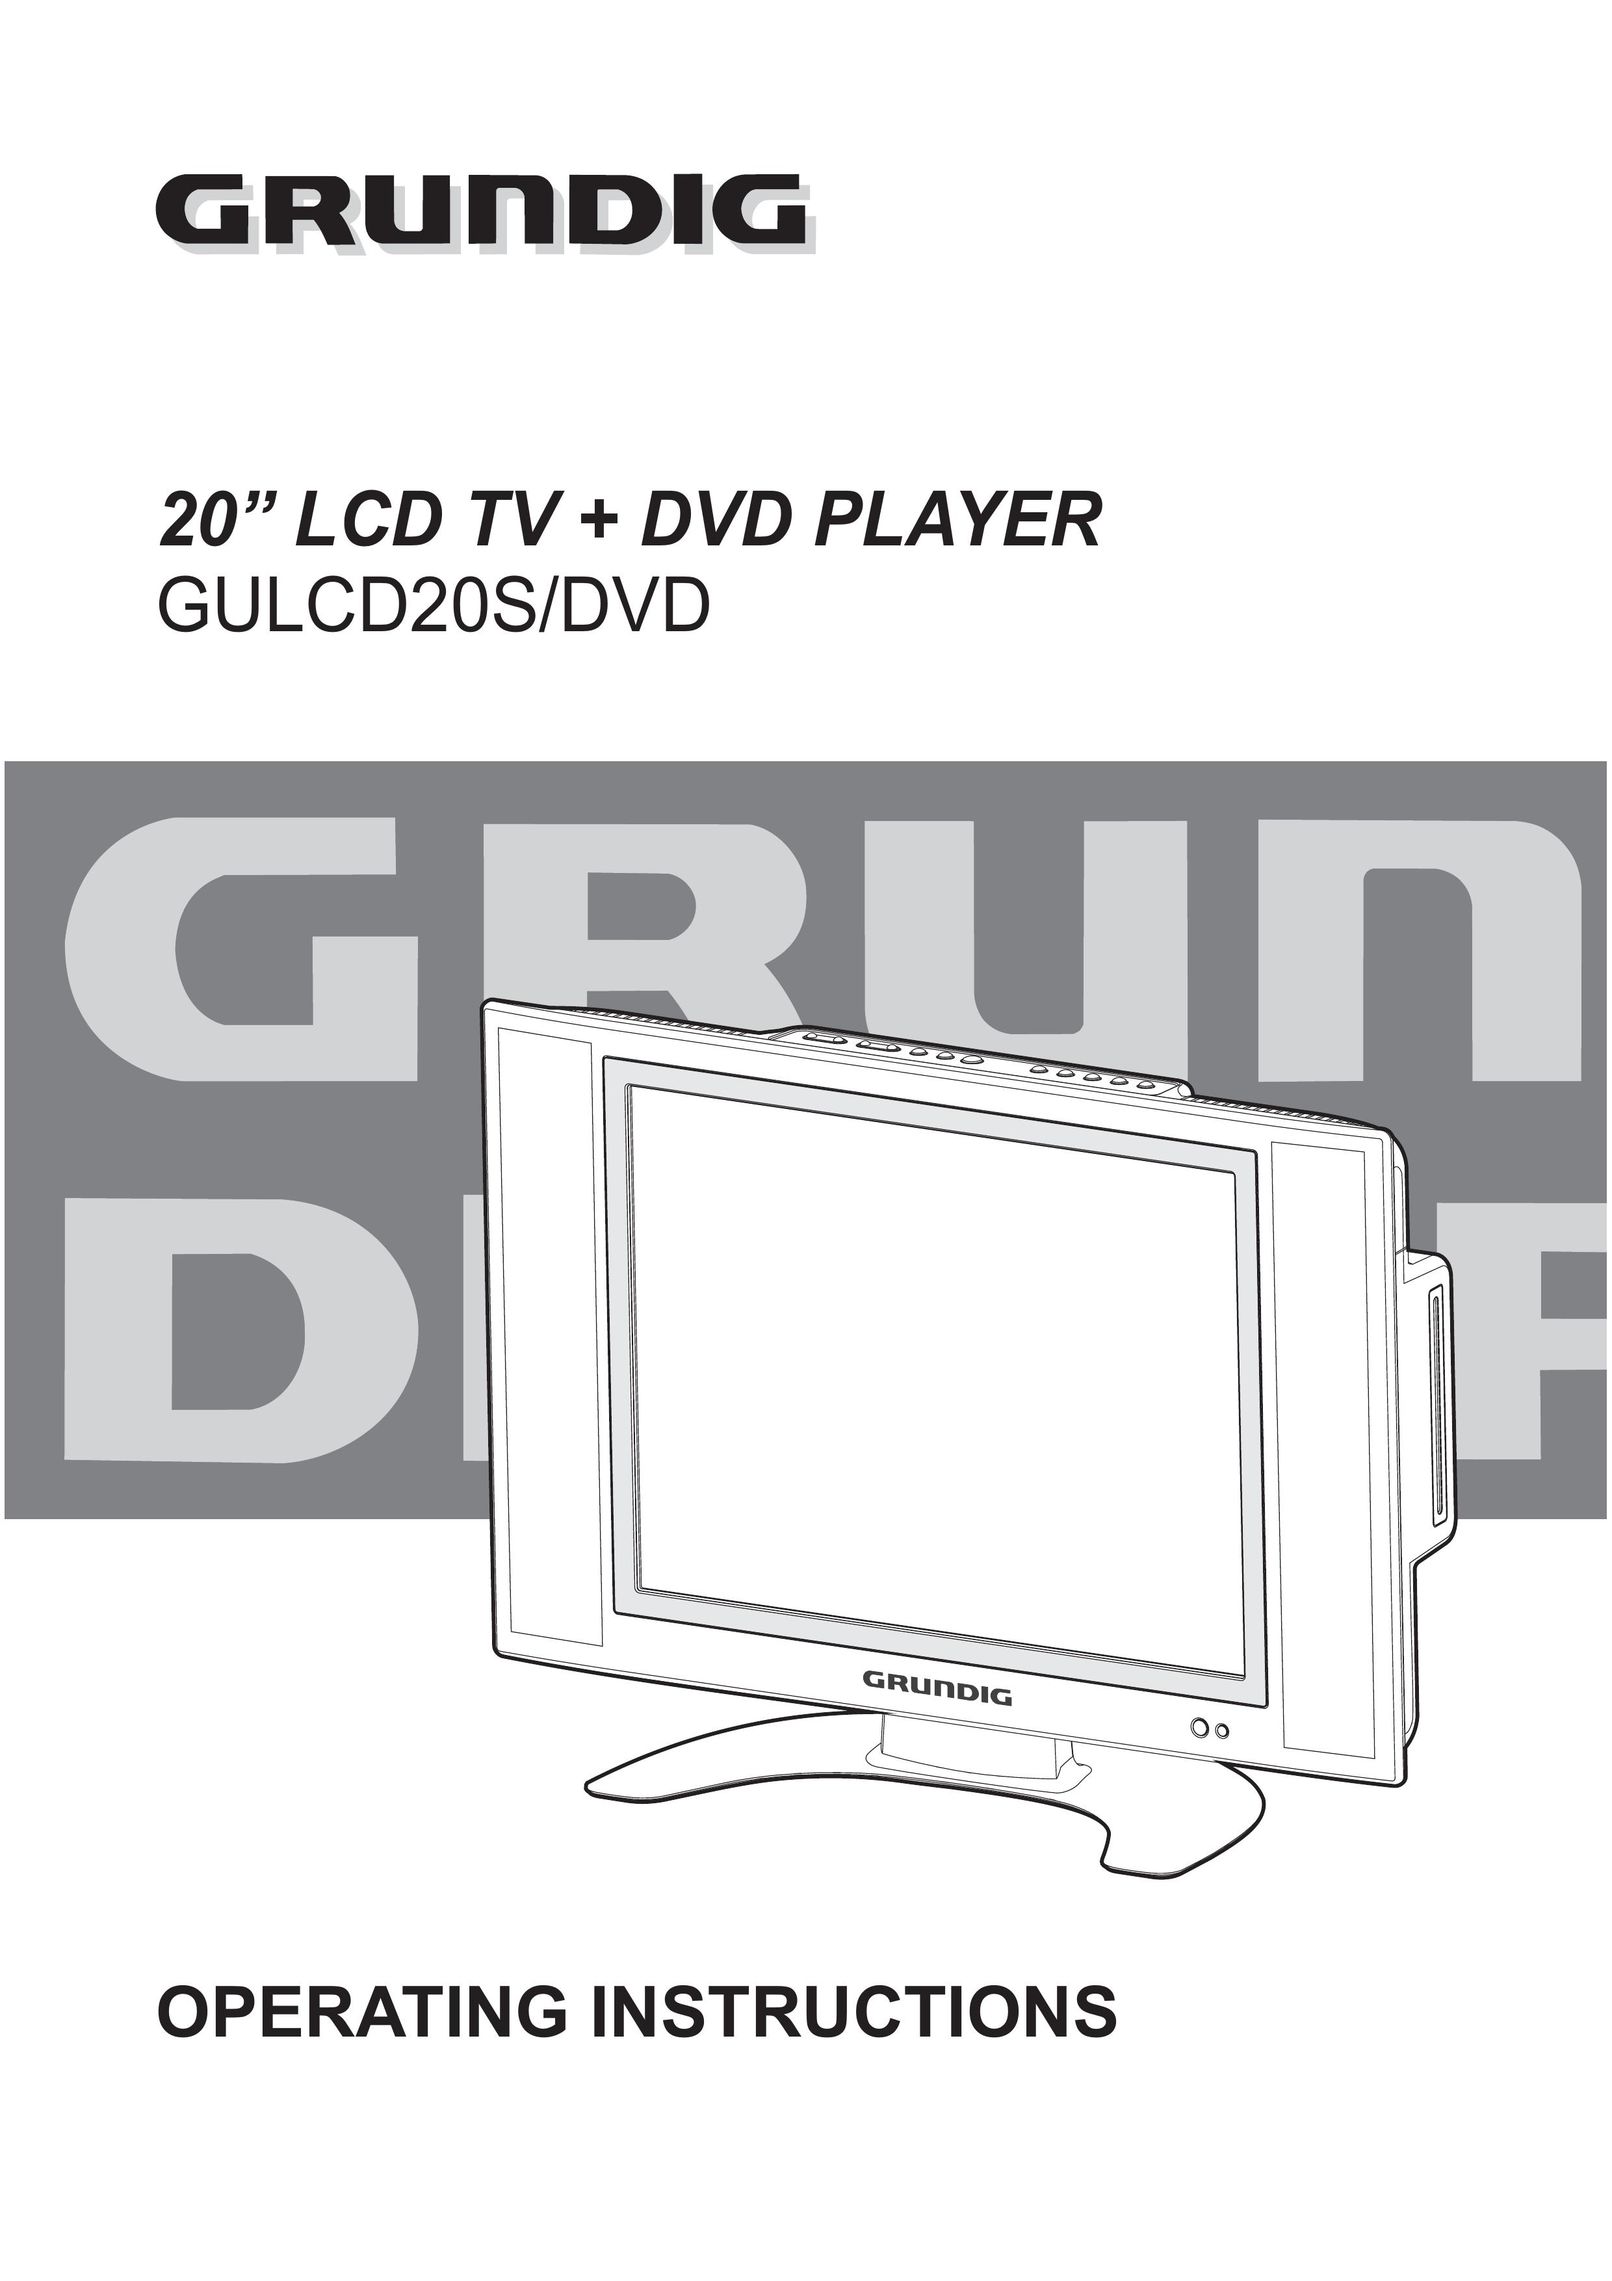 Grundig GULCD20S/DVD TV DVD Combo User Manual